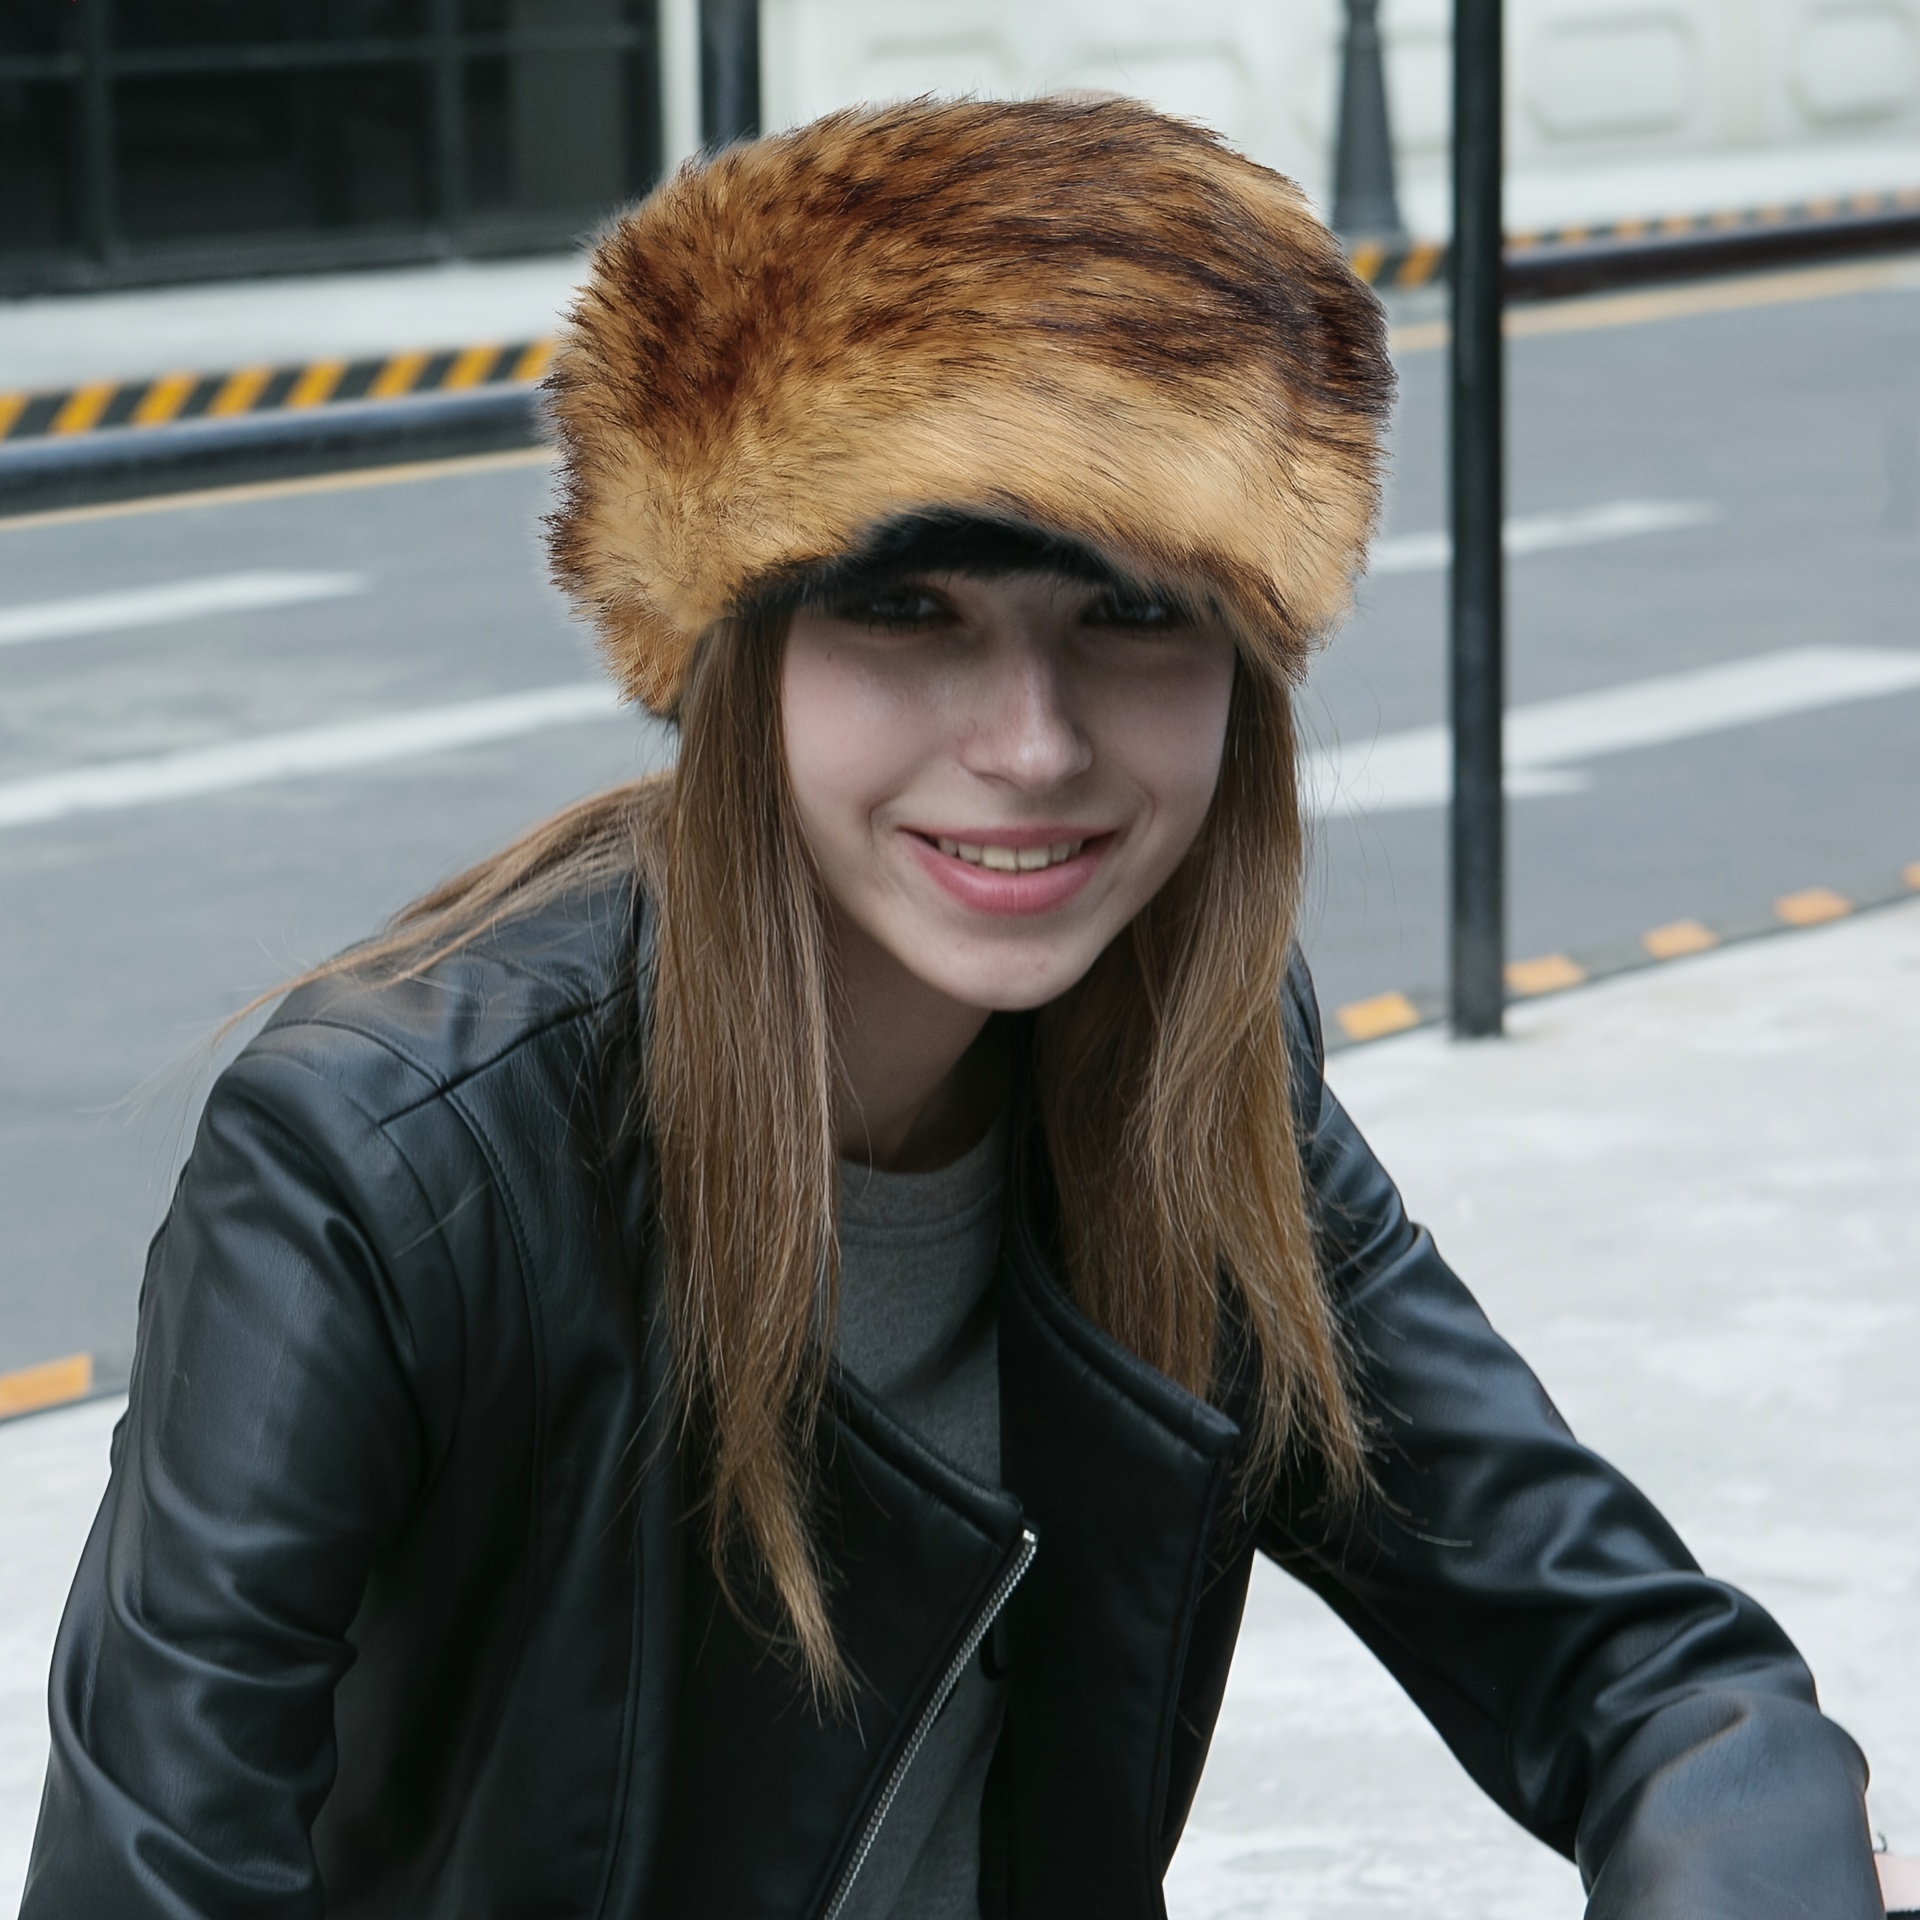 Faux Fur Head Warmer Russian Hat Style Thick Furry Headband